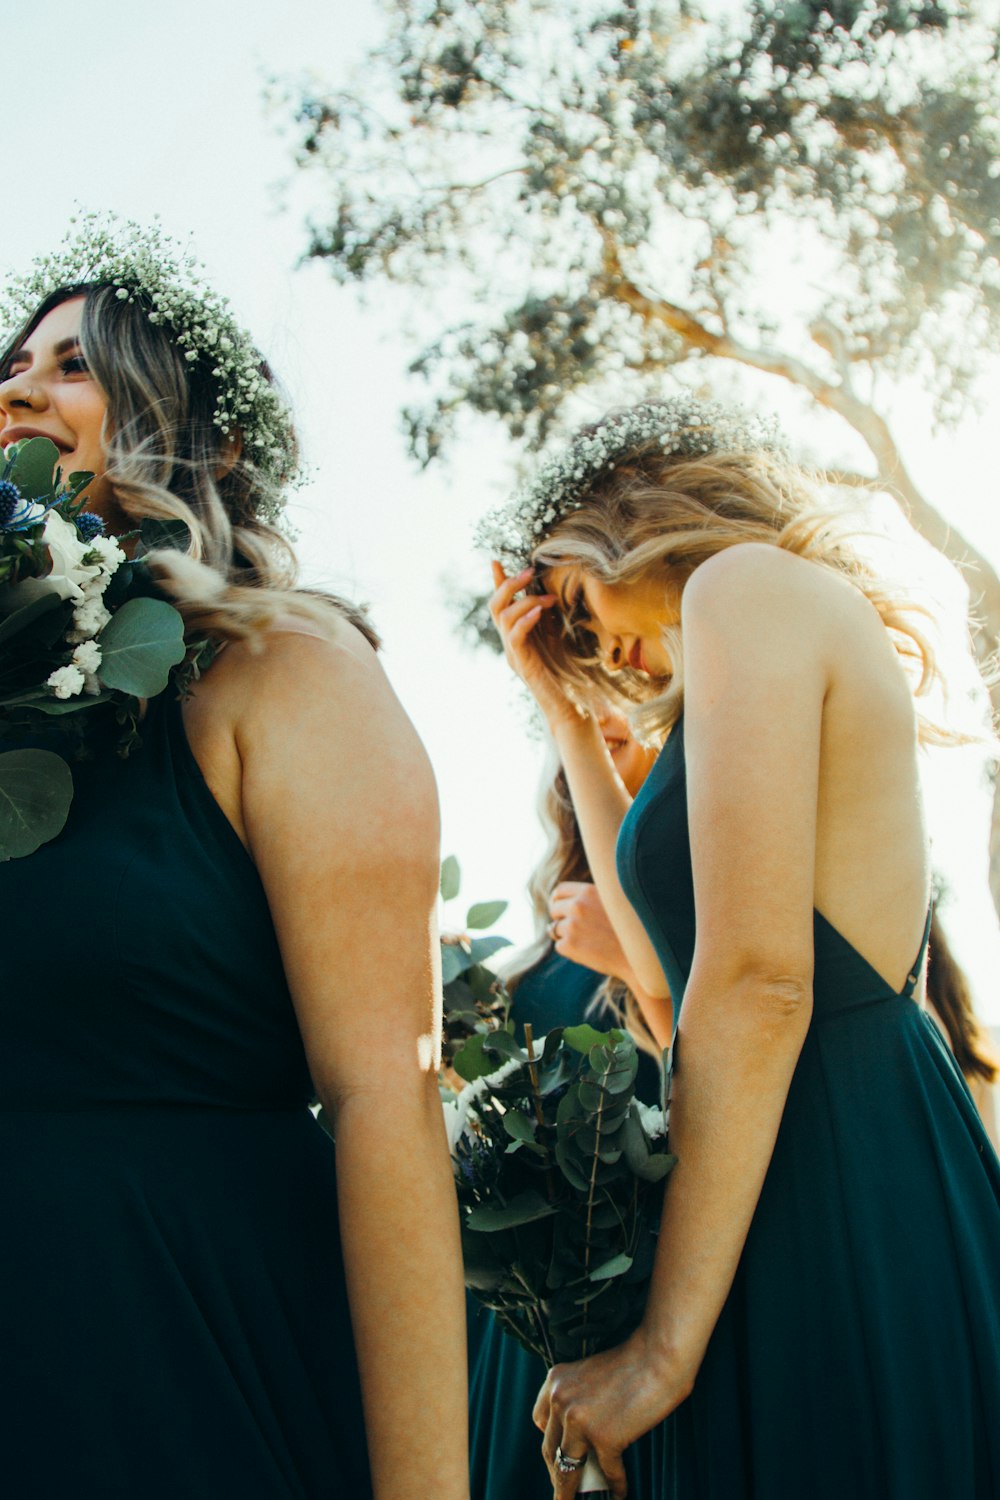 Backyard Weddings –Amazing Ideas For Your Big Day